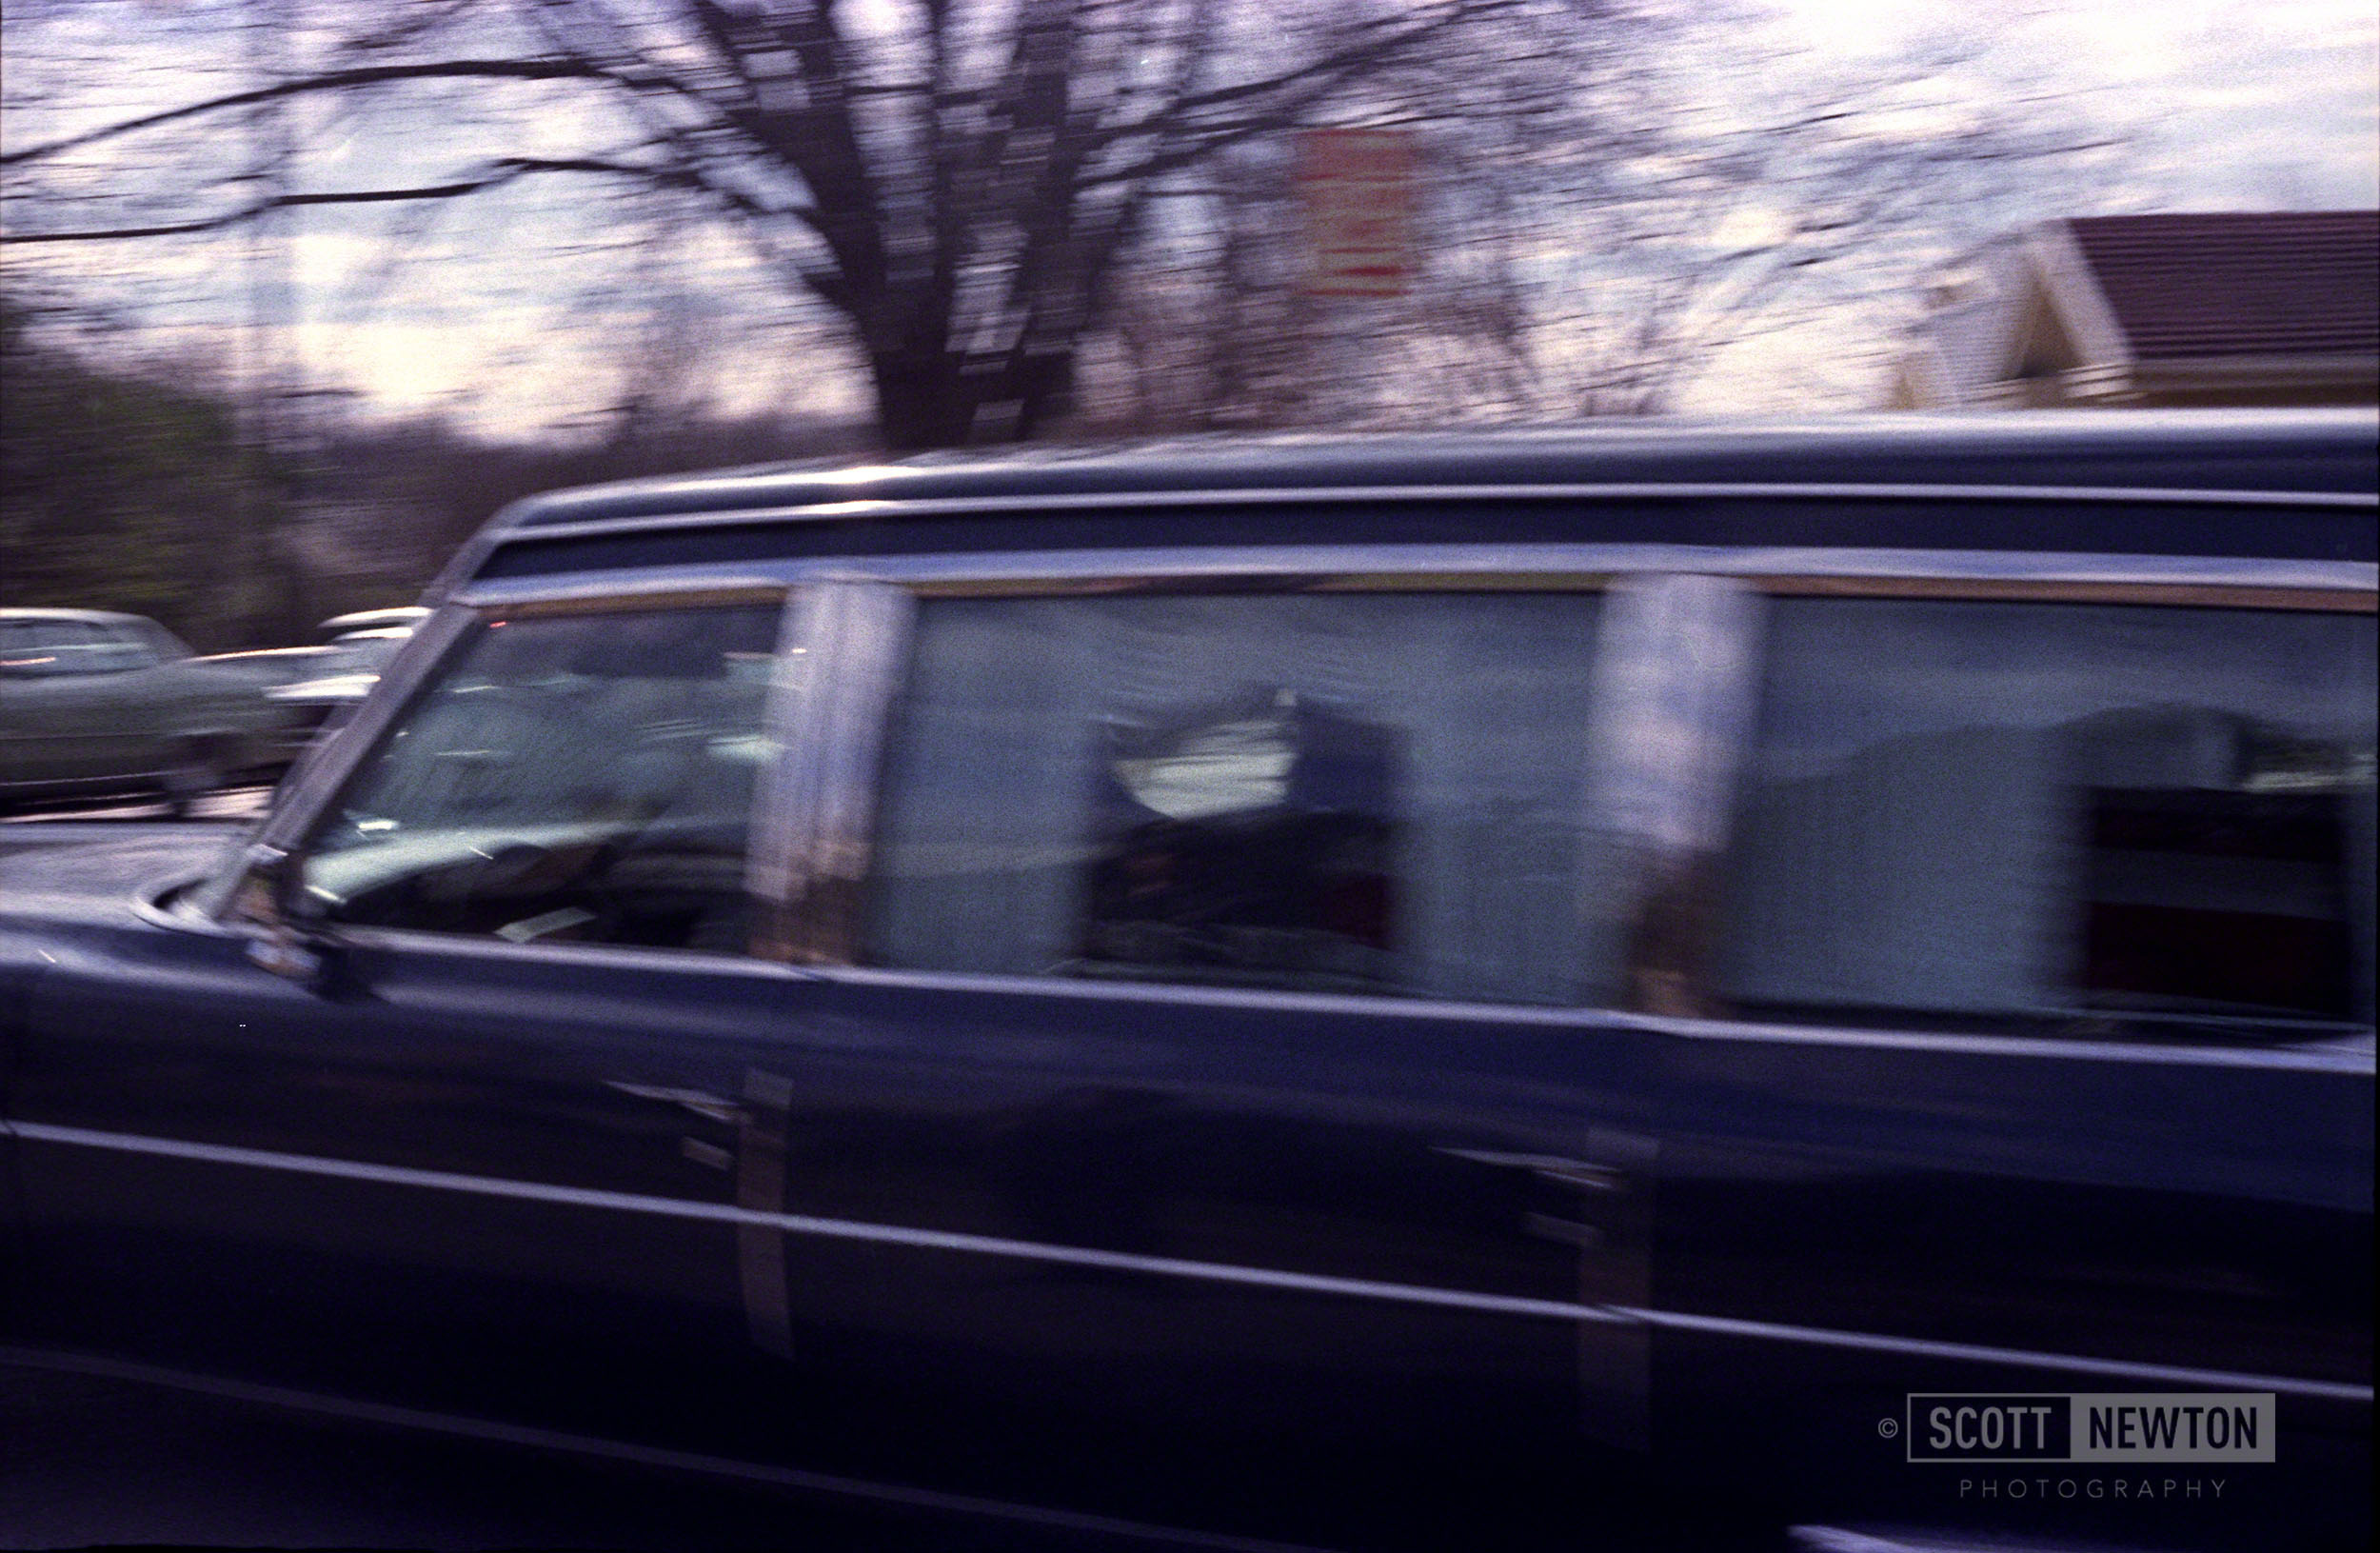 LBJ's hearse moves down 29th Street 1973